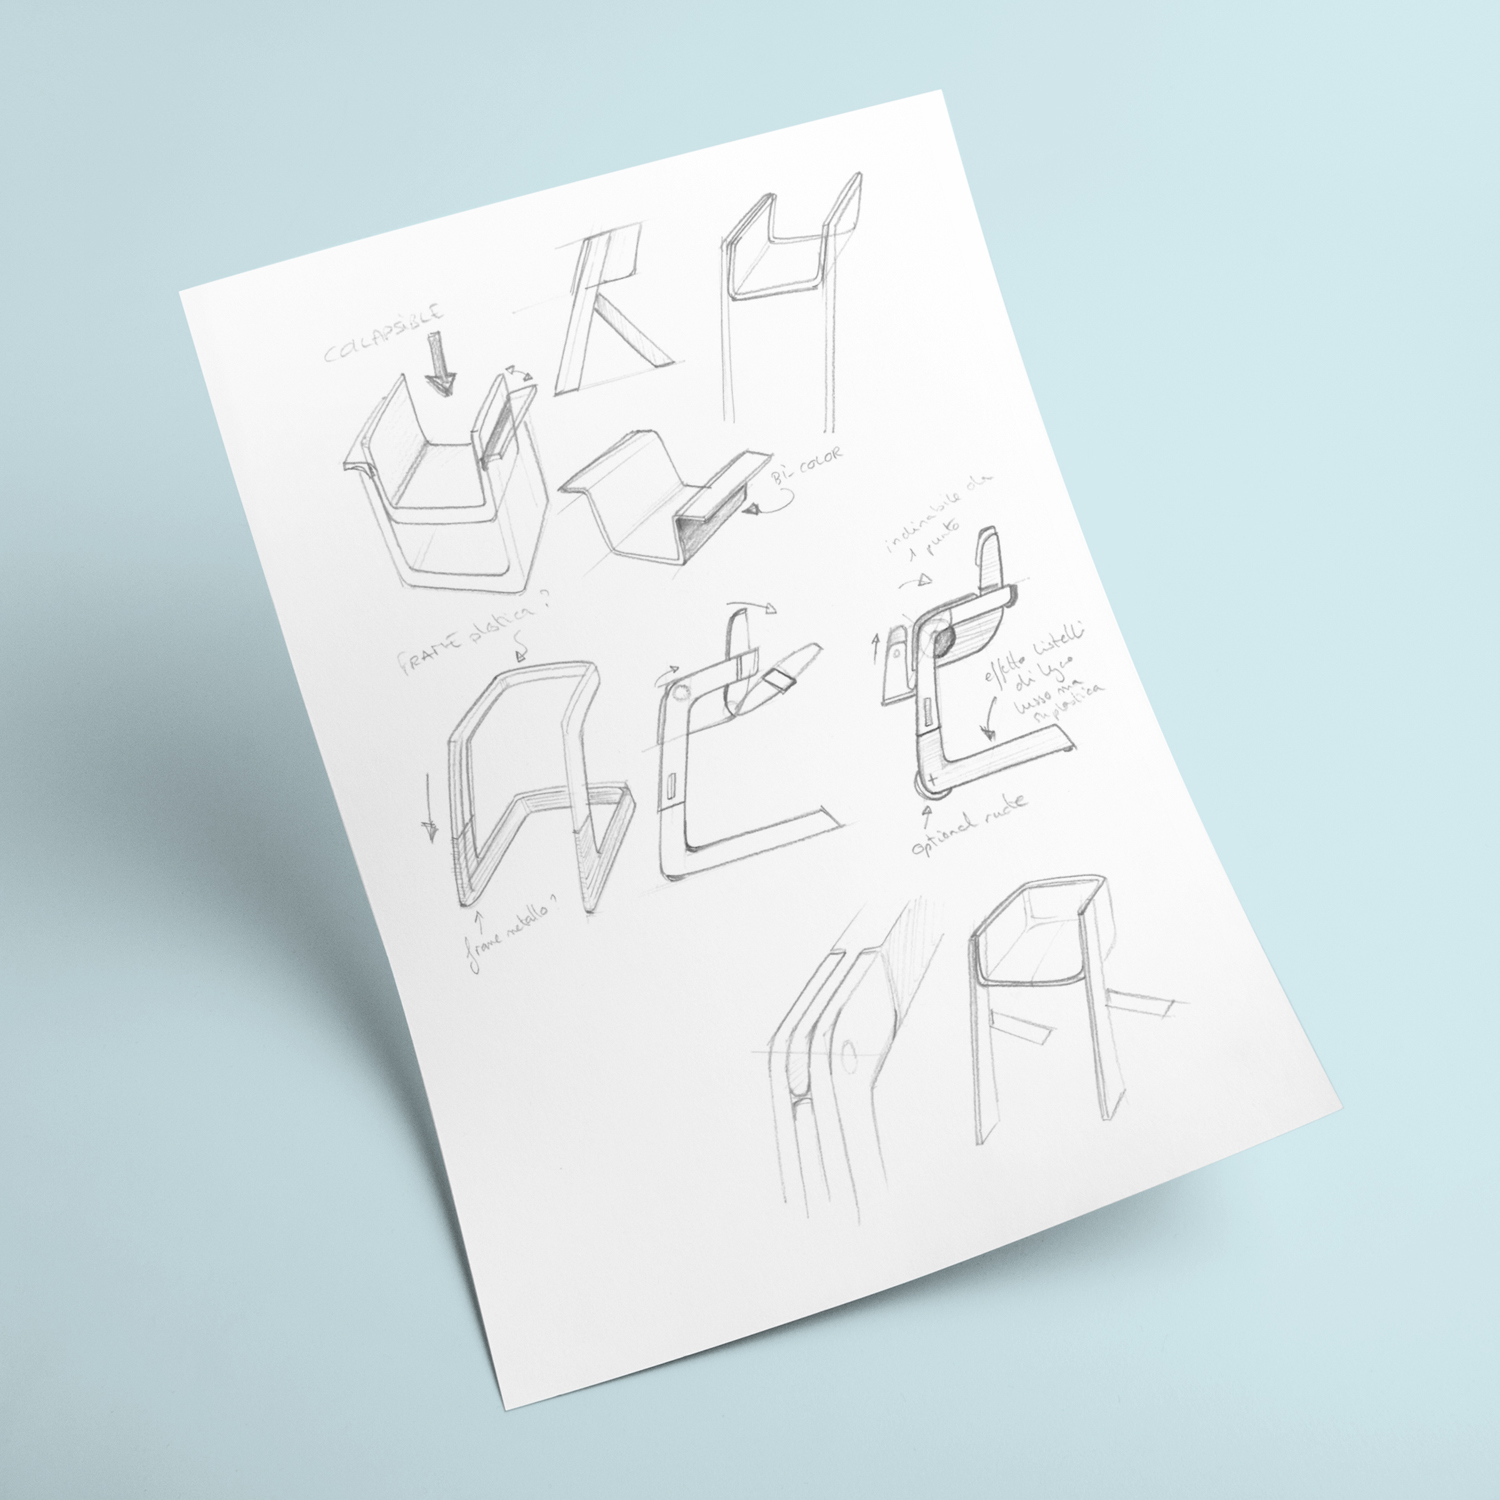 BabyFirst high chair design by innovation design agency Studio Volpi